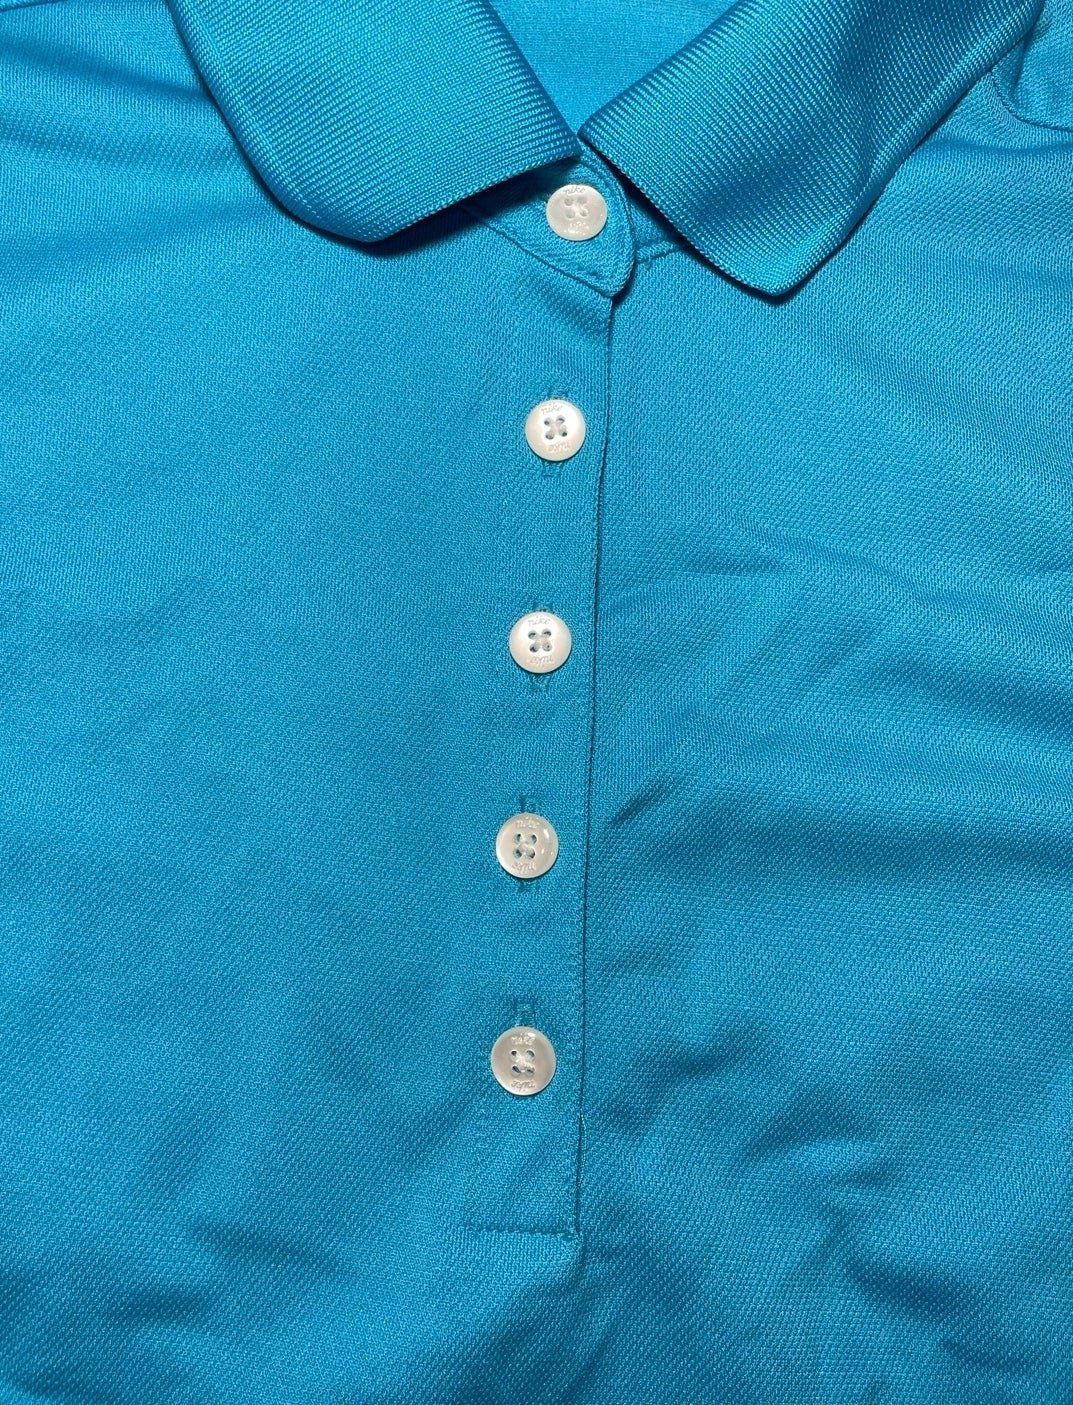 good price Nike Golf Dri-Fit Polo Shirt Womens XS Petite Aqua Blue OT9i3pJqr just for you